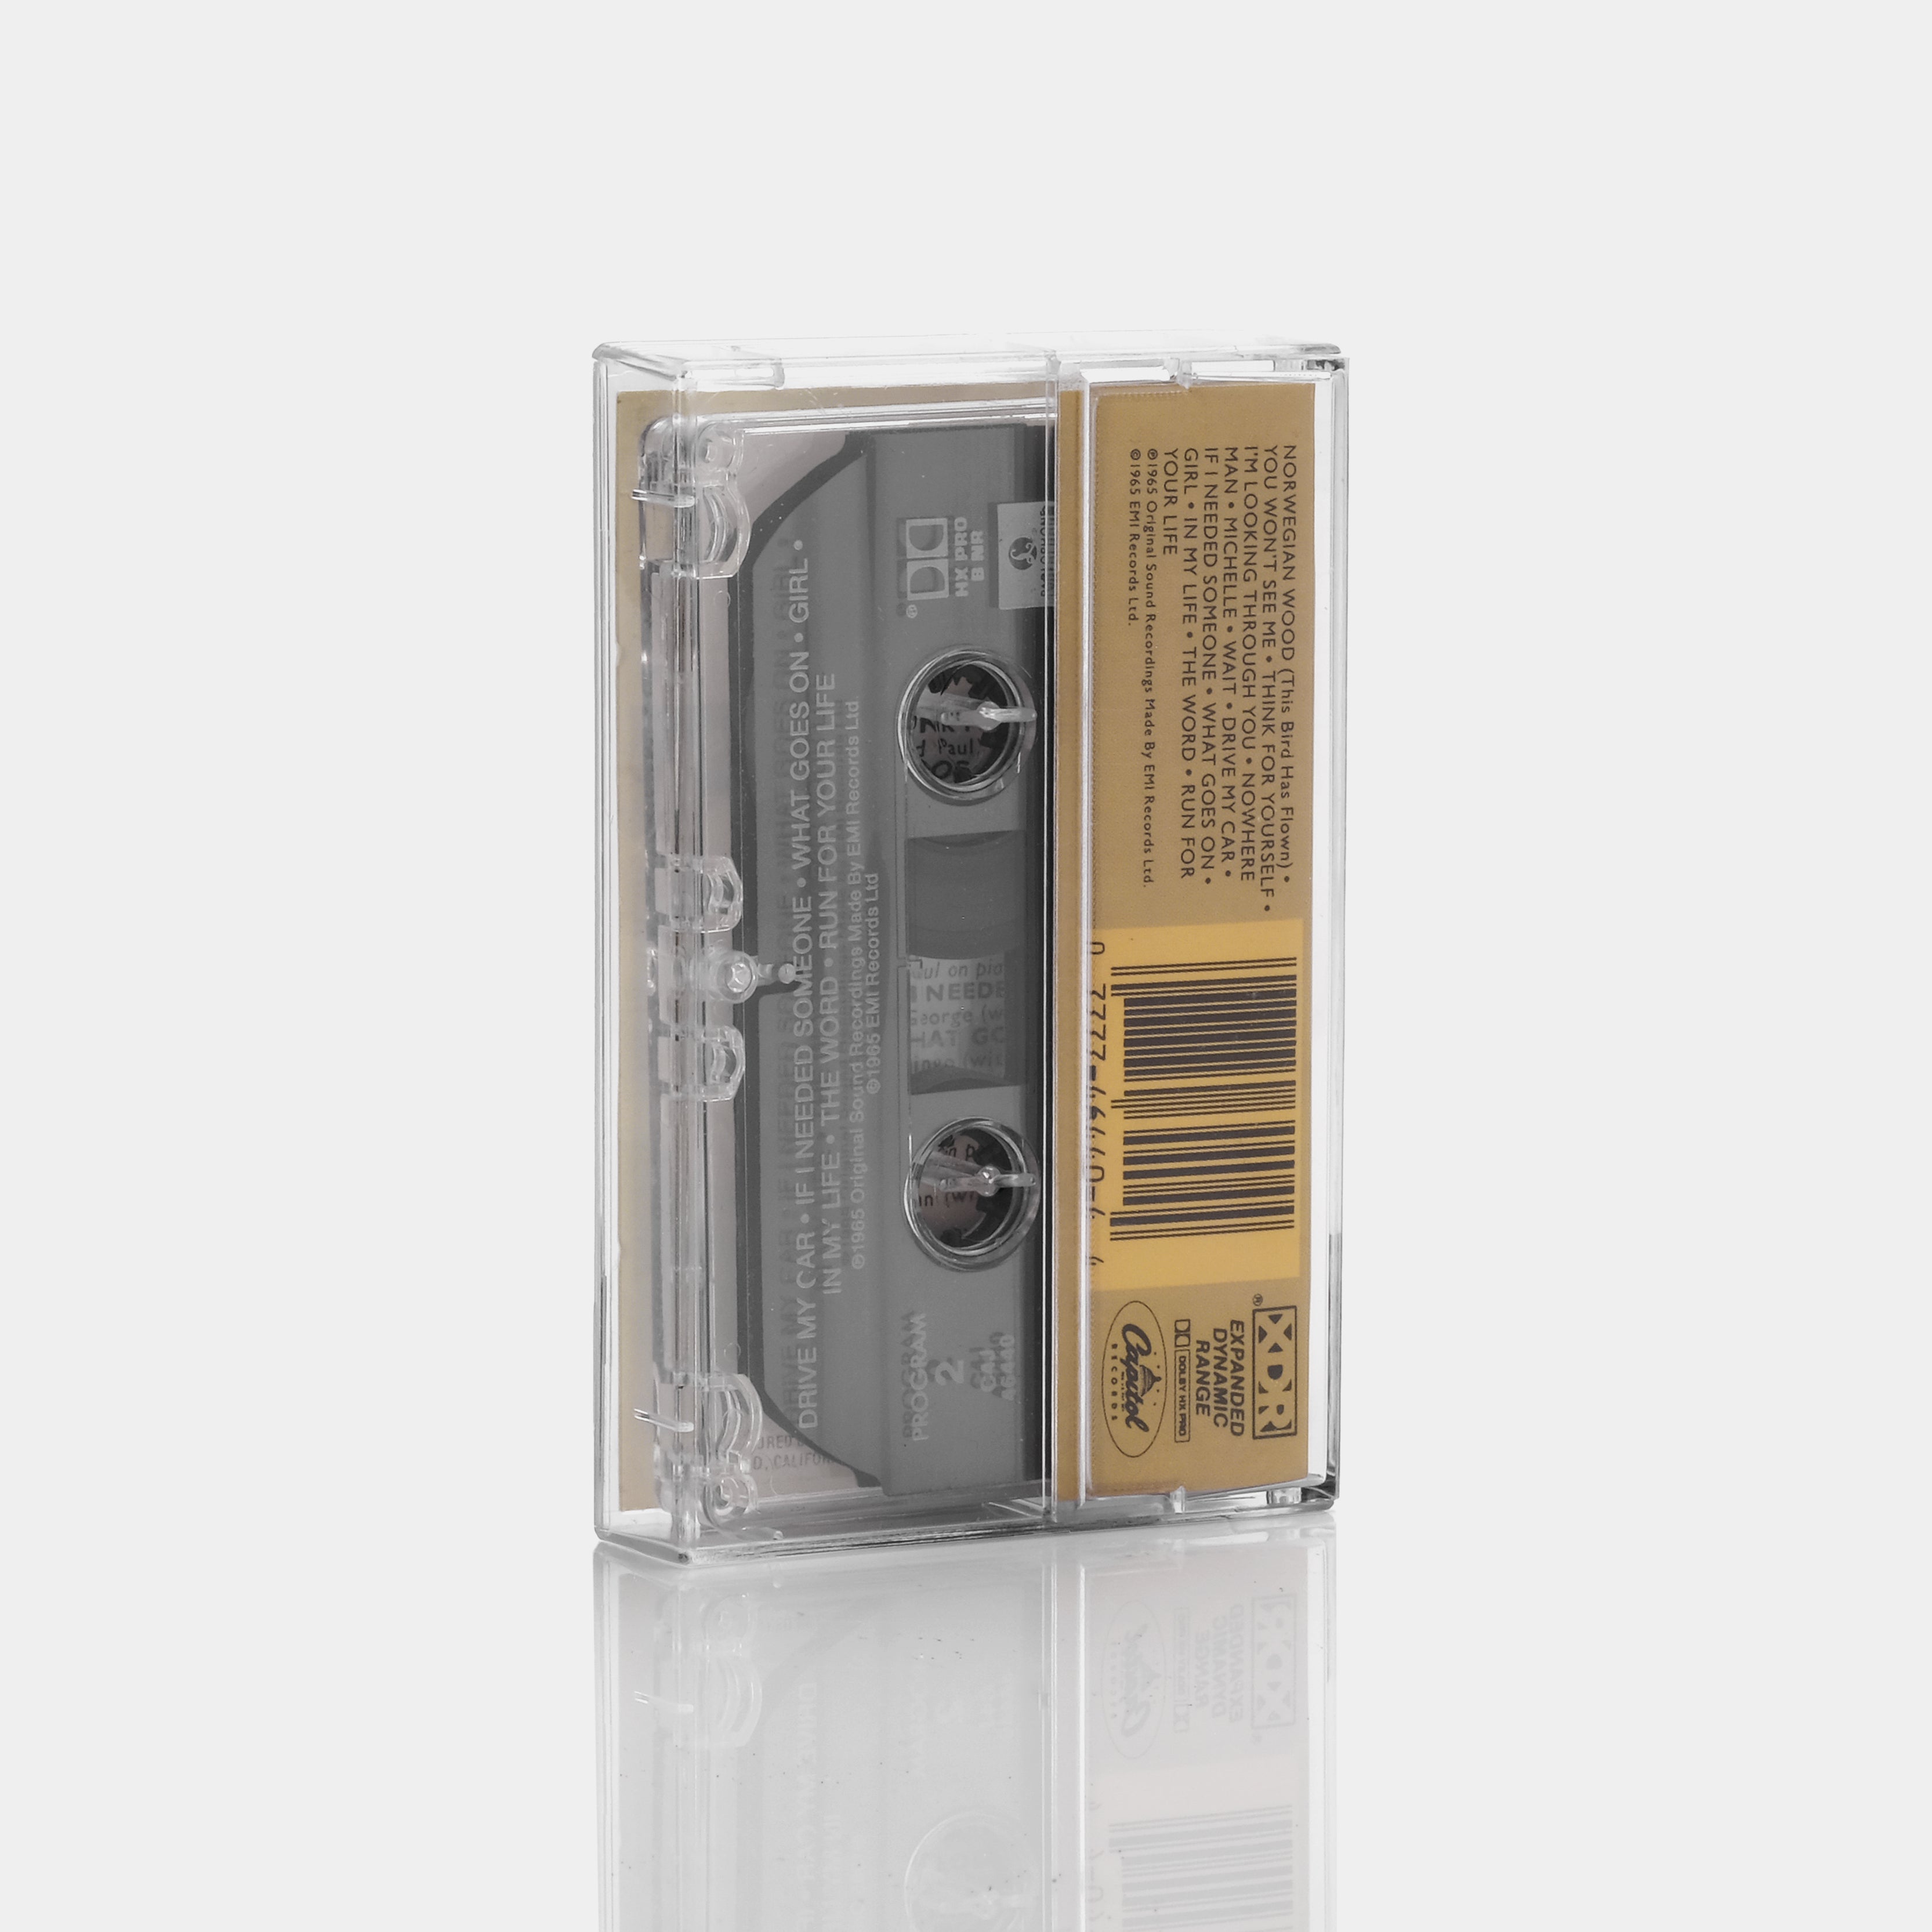 The Beatles - Rubber Soul Cassette Tape